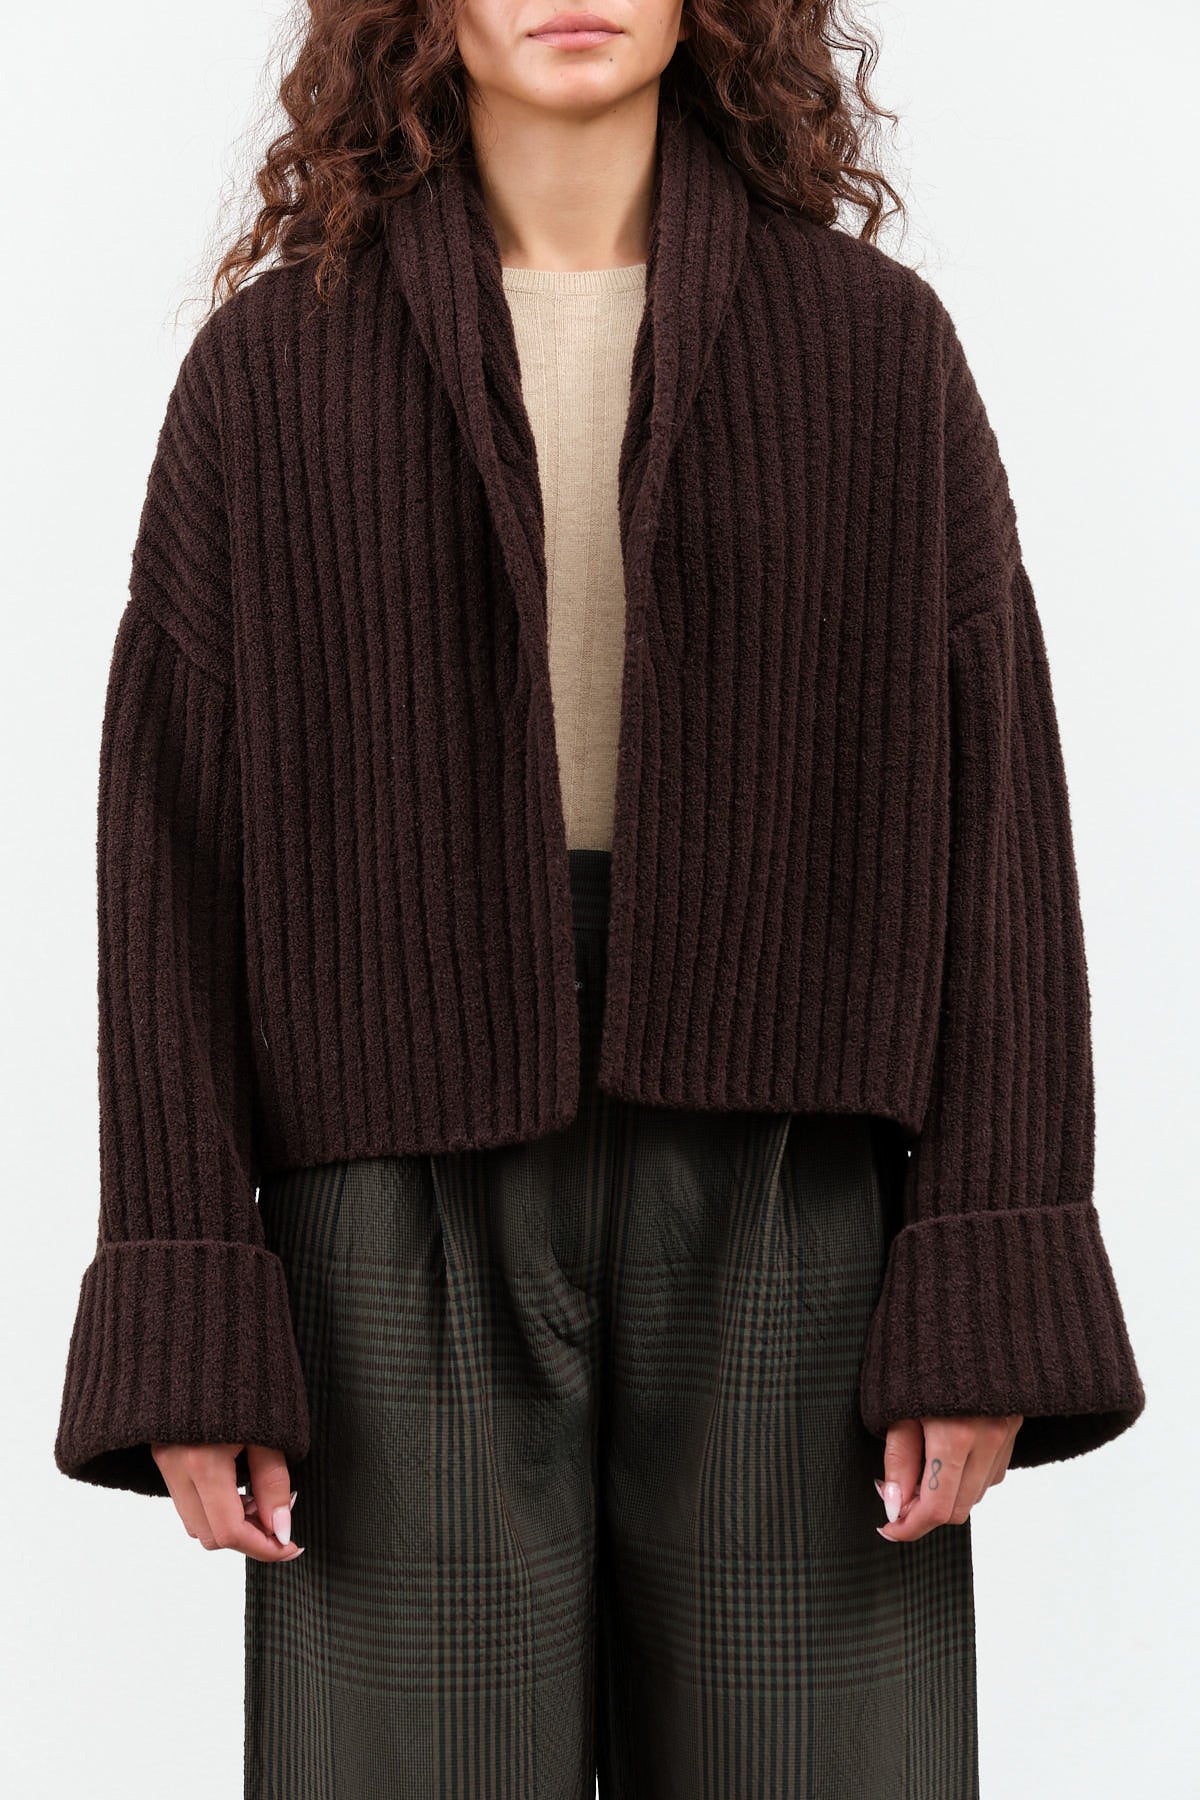 Kojo Sweater by Christian Wijnants in Dark Brown